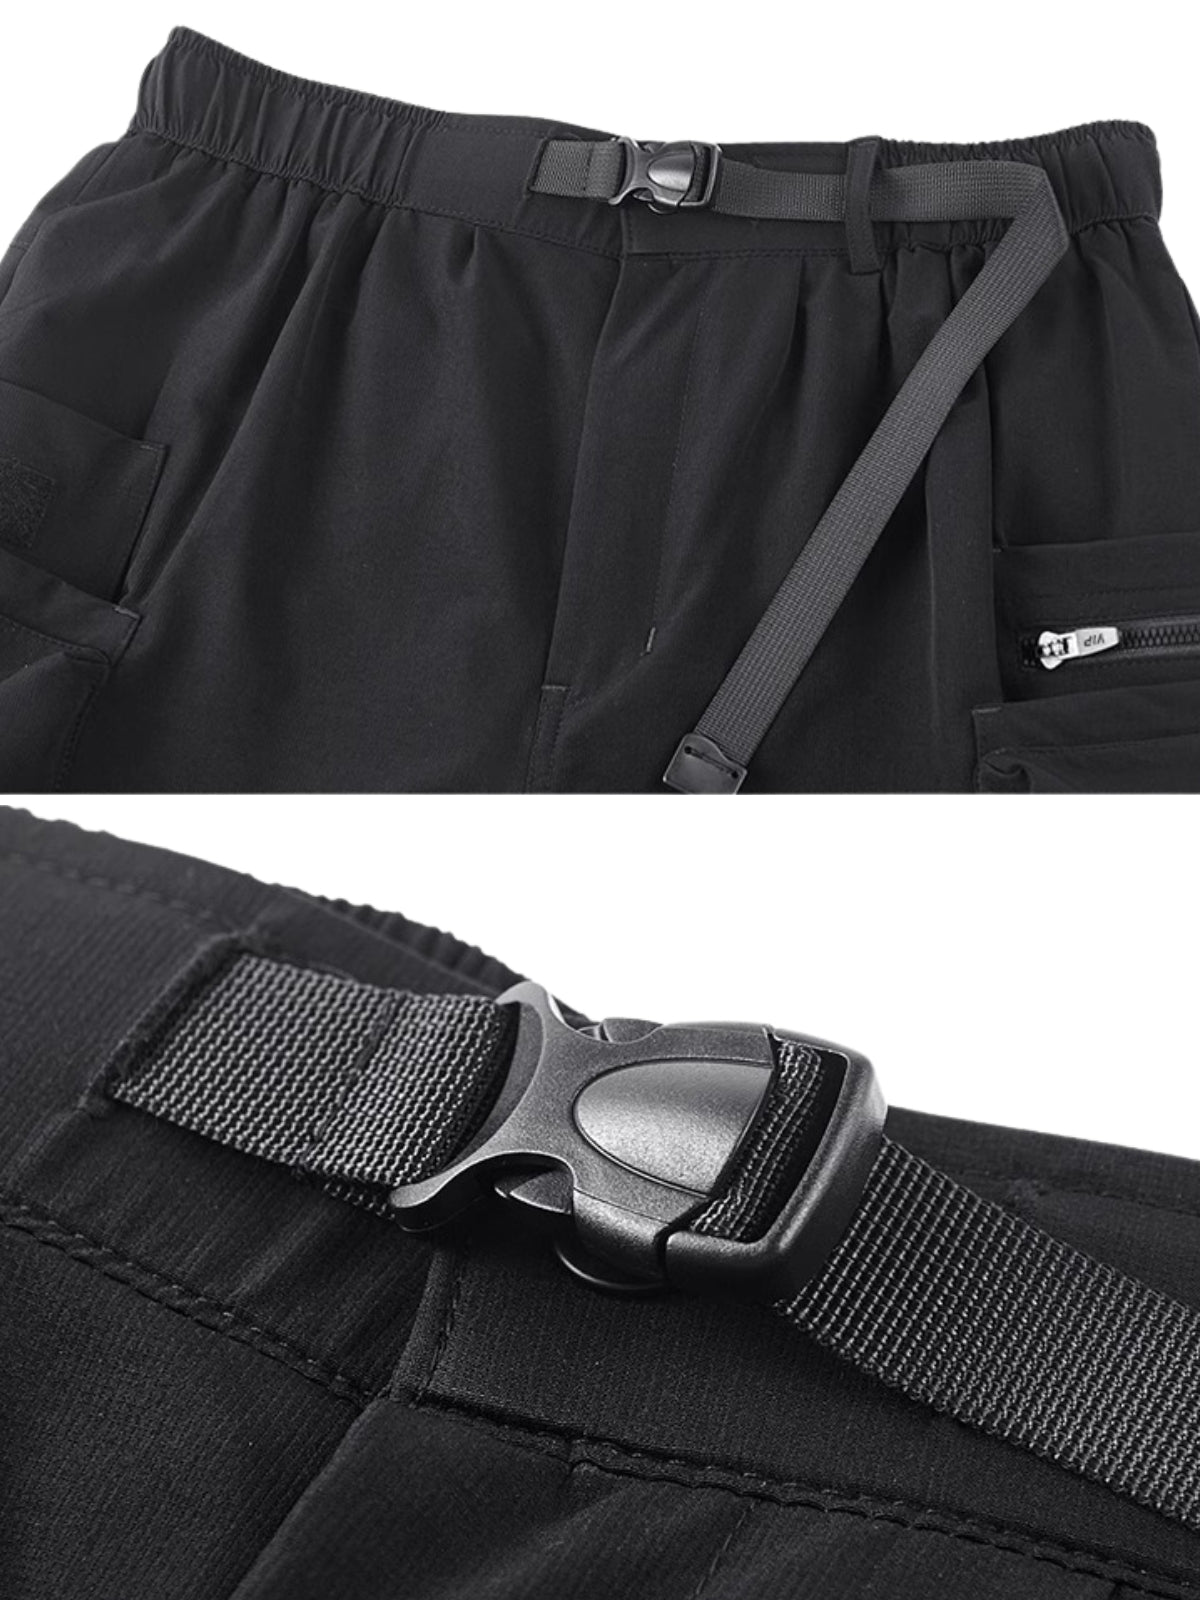 FlexFit Elastic Multi-Pocket Shorts